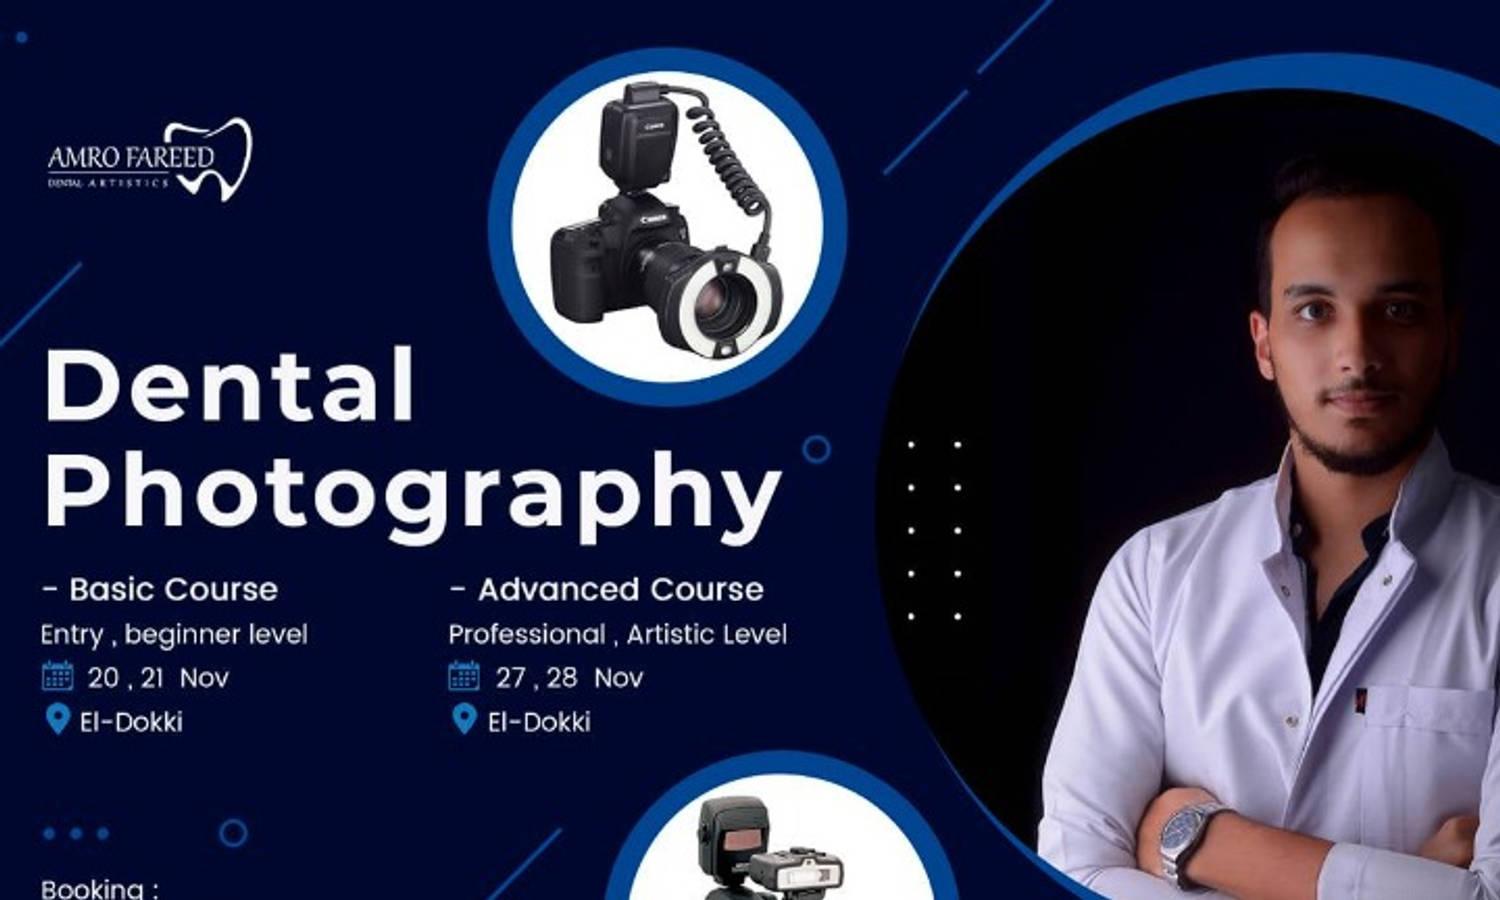 Advanced Dental Photography Course